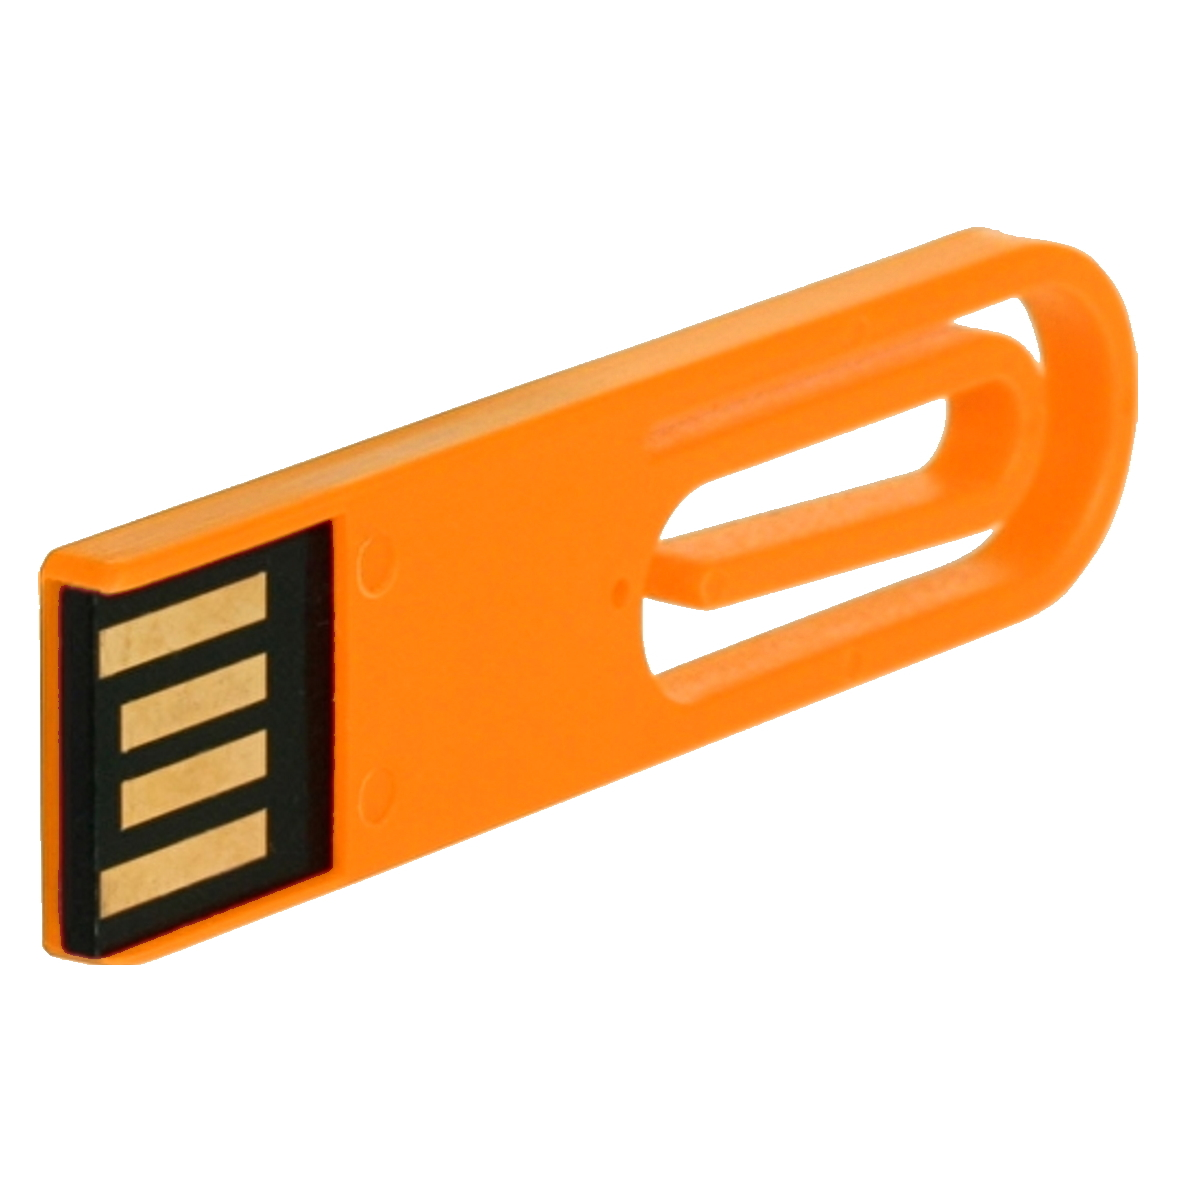 GB) USB GERMANY USB-Stick 8 ® eCLIP (Orange,